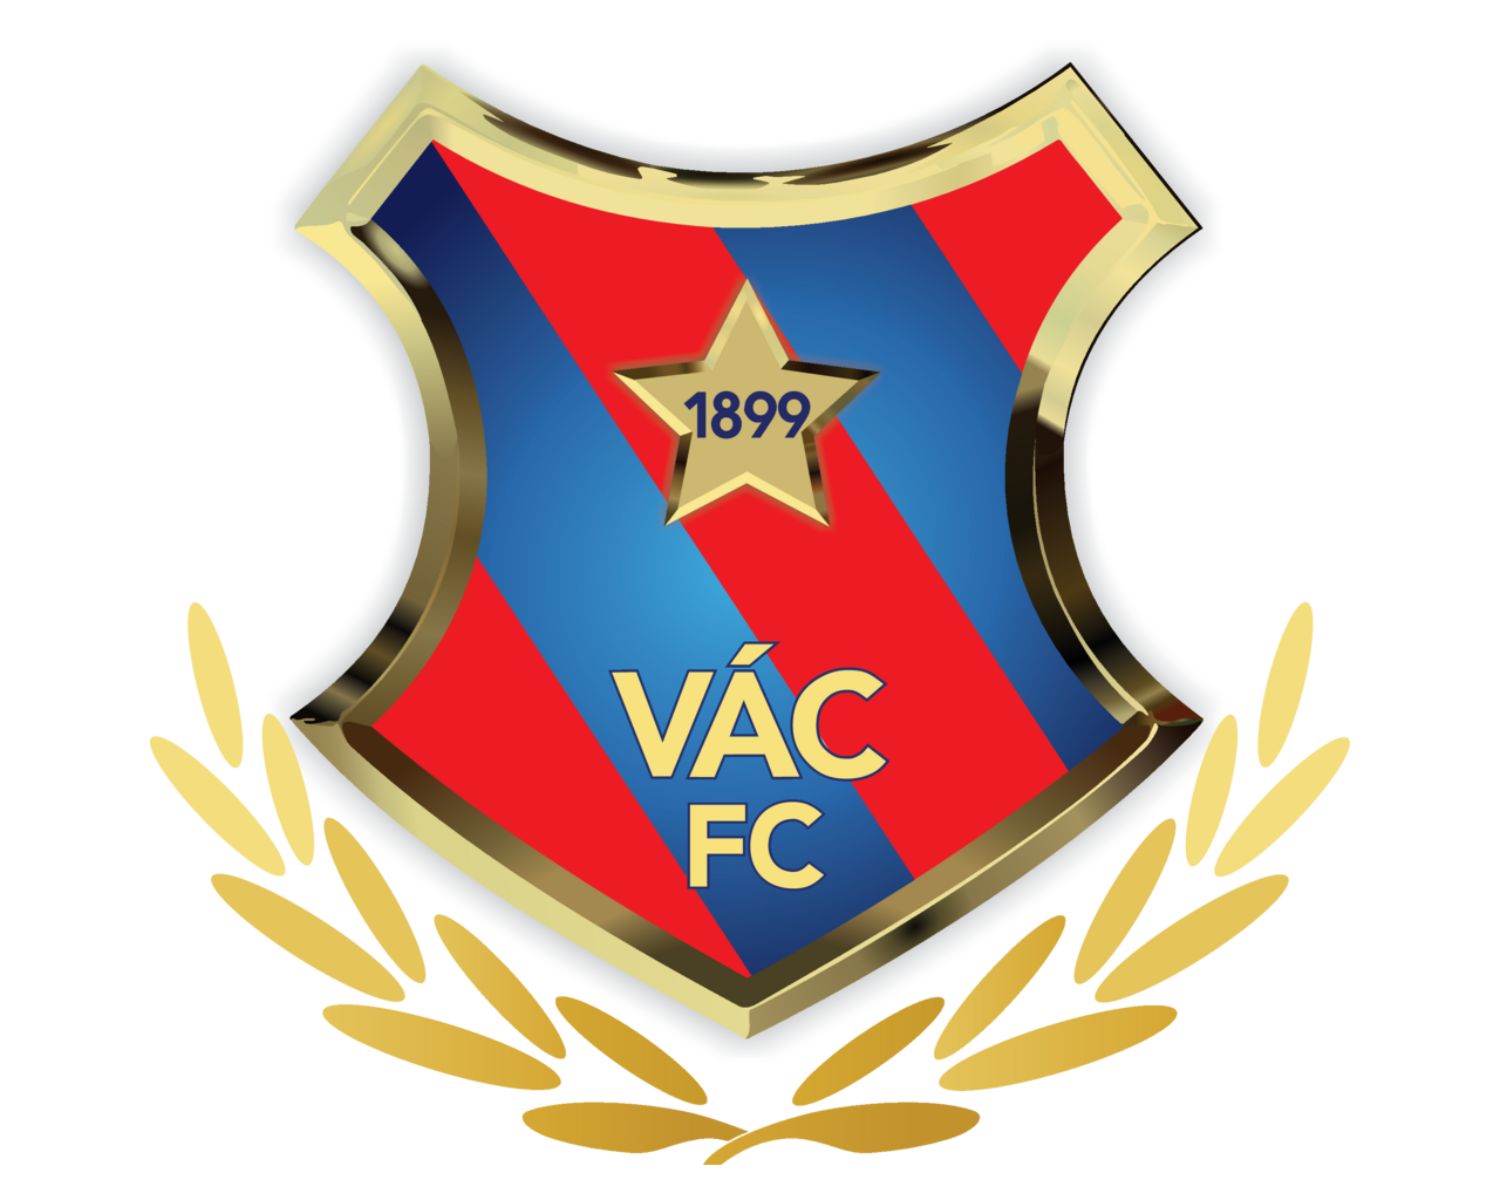 vac-fc-16-football-club-facts